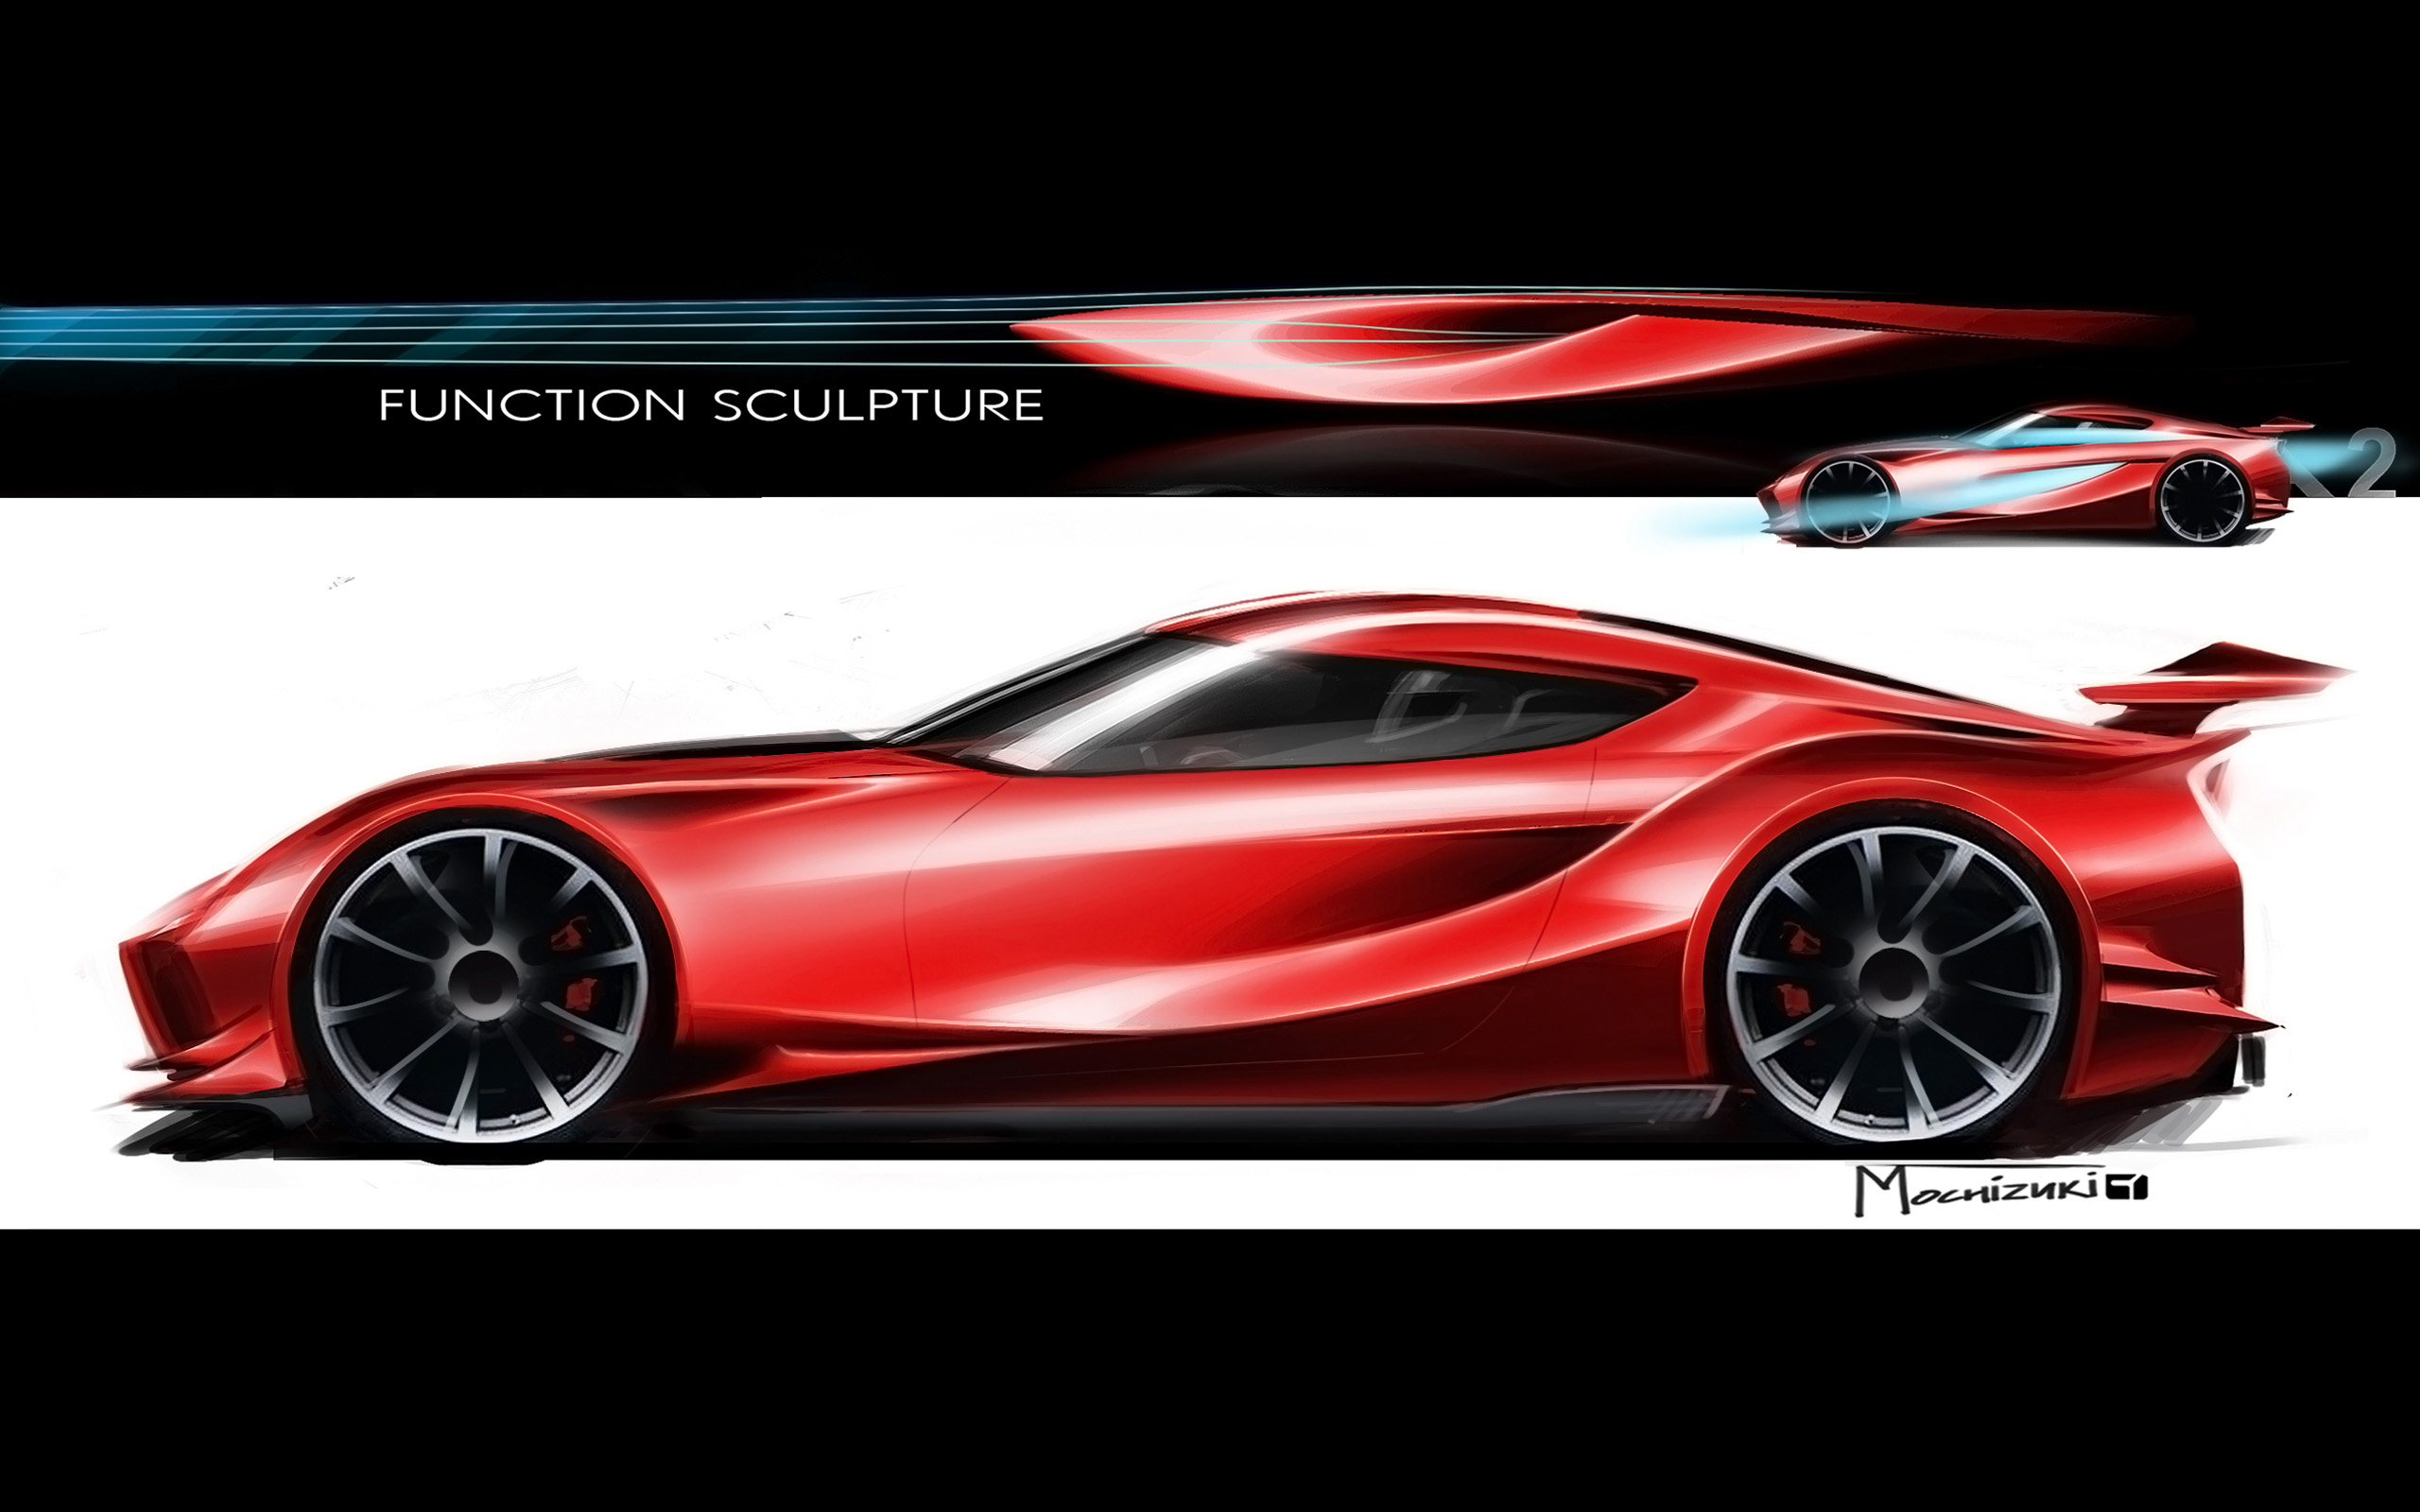 2014, Toyota, Ft 1, Concept, Supercar Wallpaper